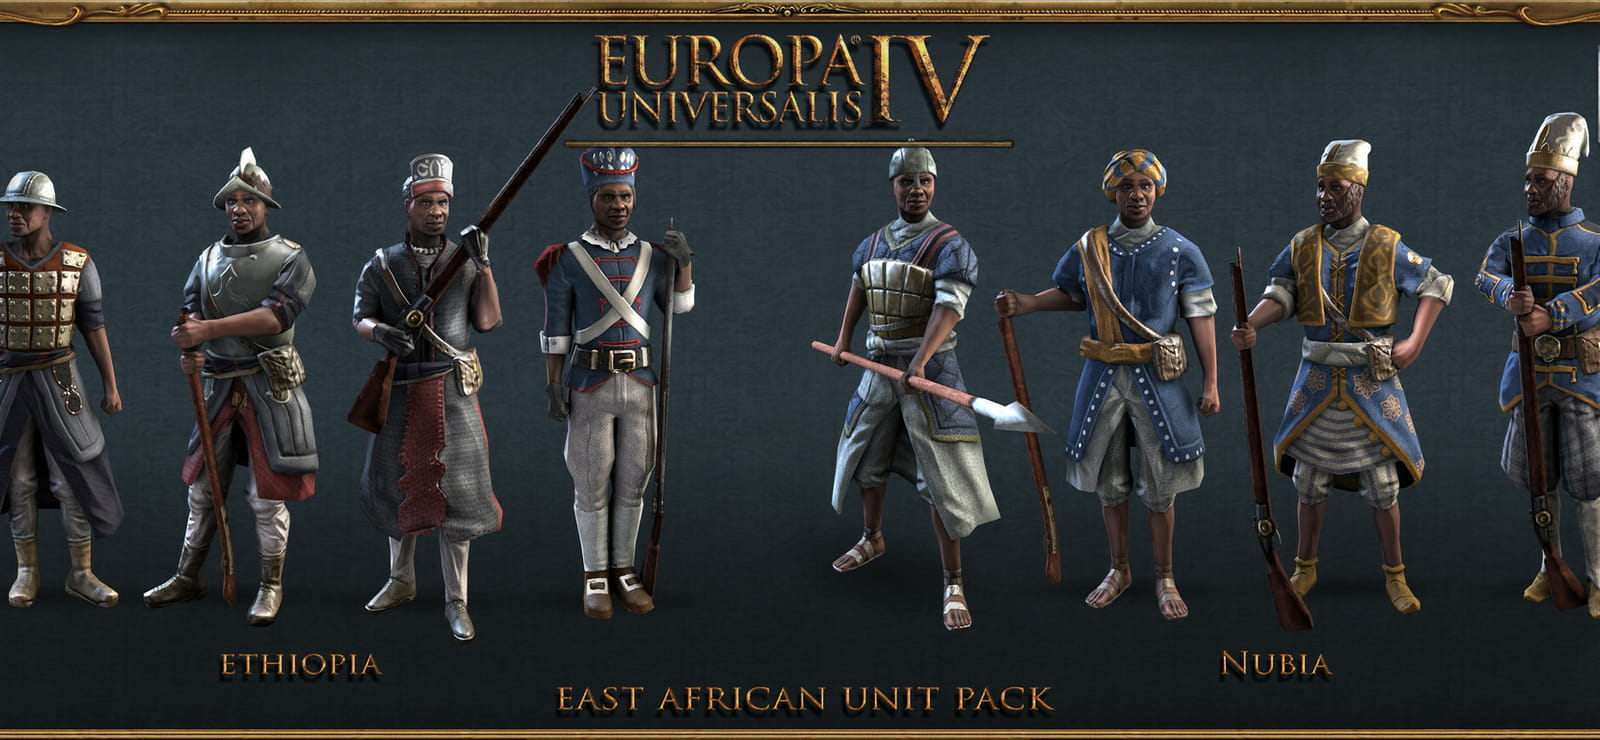 Content Pack - Europa Universalis IV: Mare Nostrum